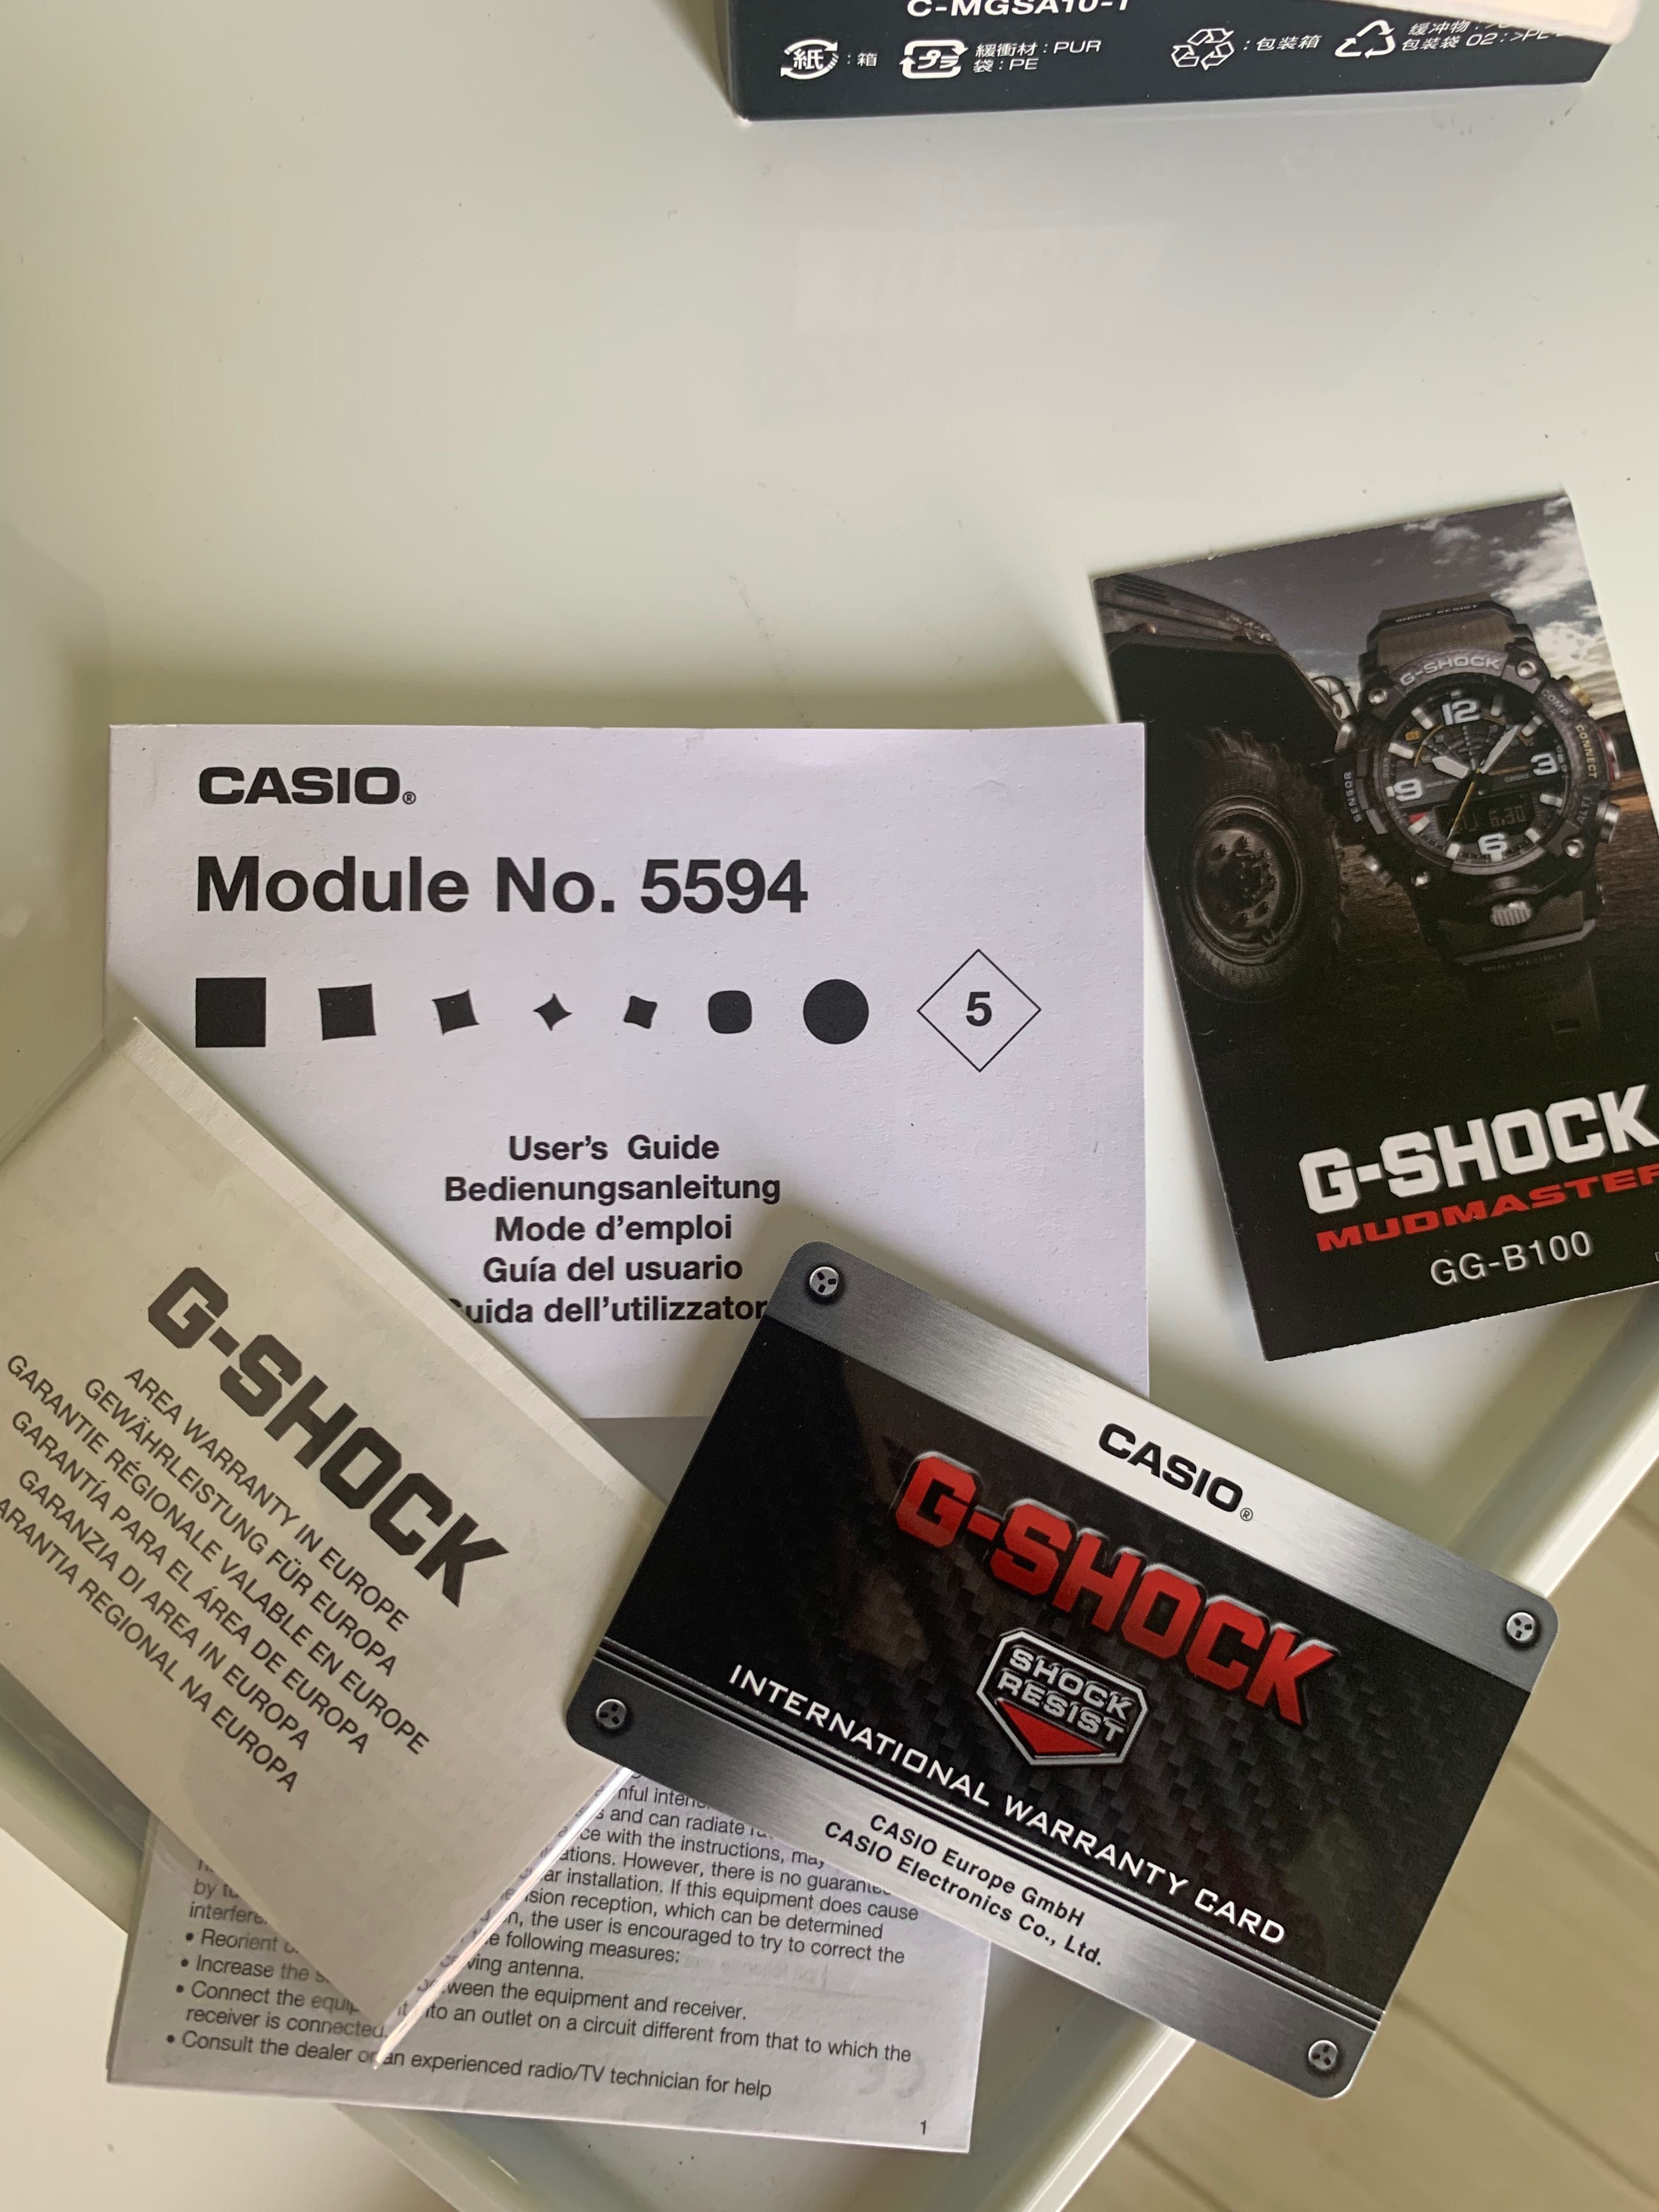 G-shock Mudmaster GG-B100–1A3ER